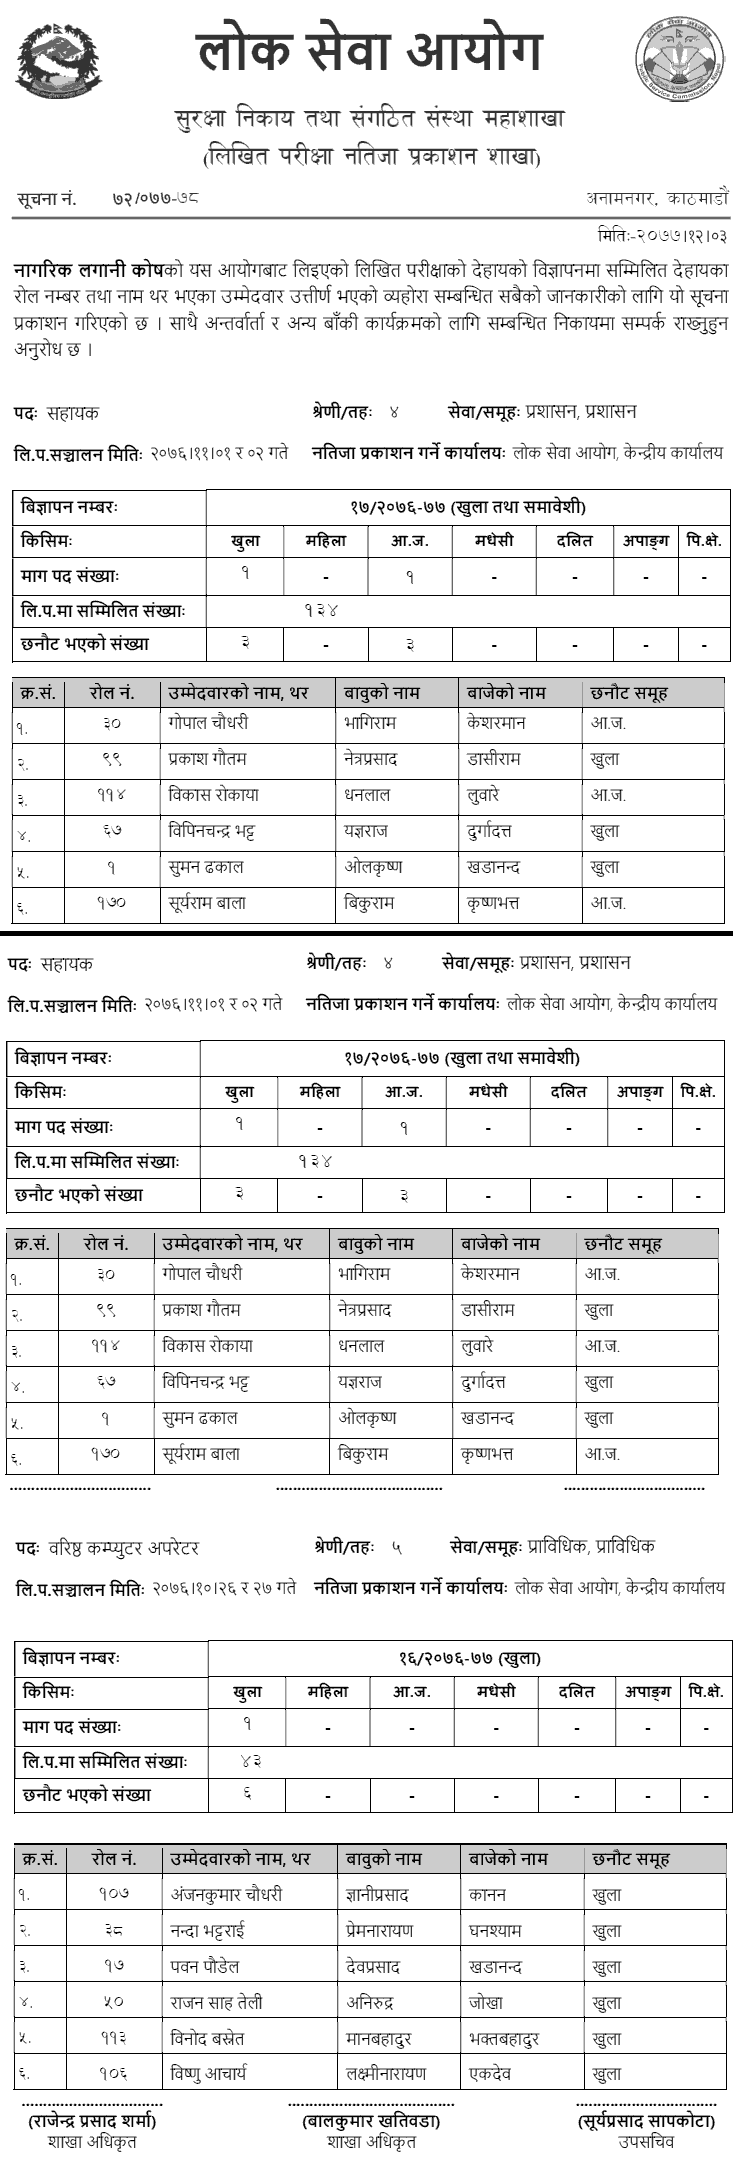 Nagarik Lagani Kosh Written Examination Result of 4th and 5th Level Assistant